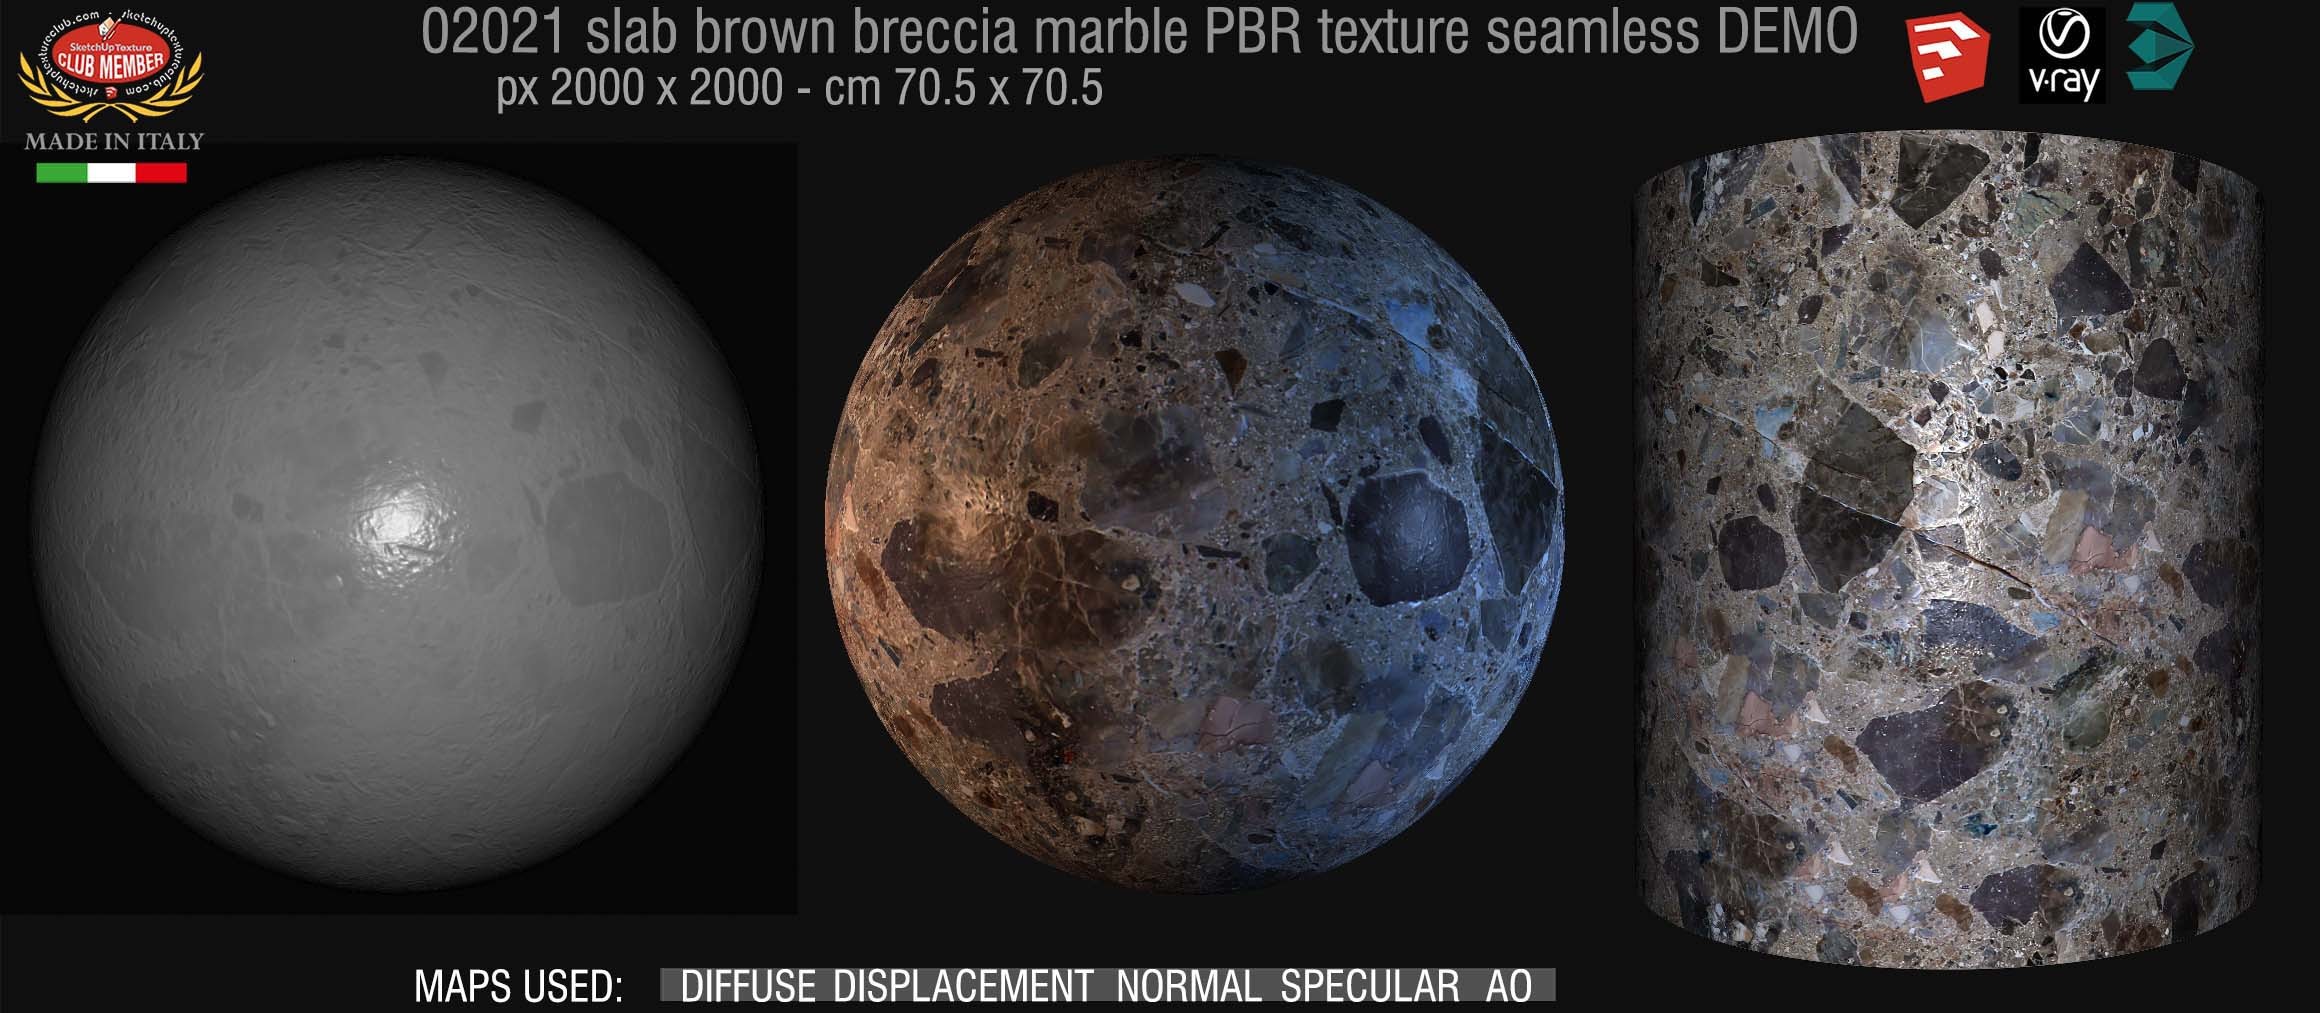 02021 slab brown breccia marble PBR texture seamless DEMO